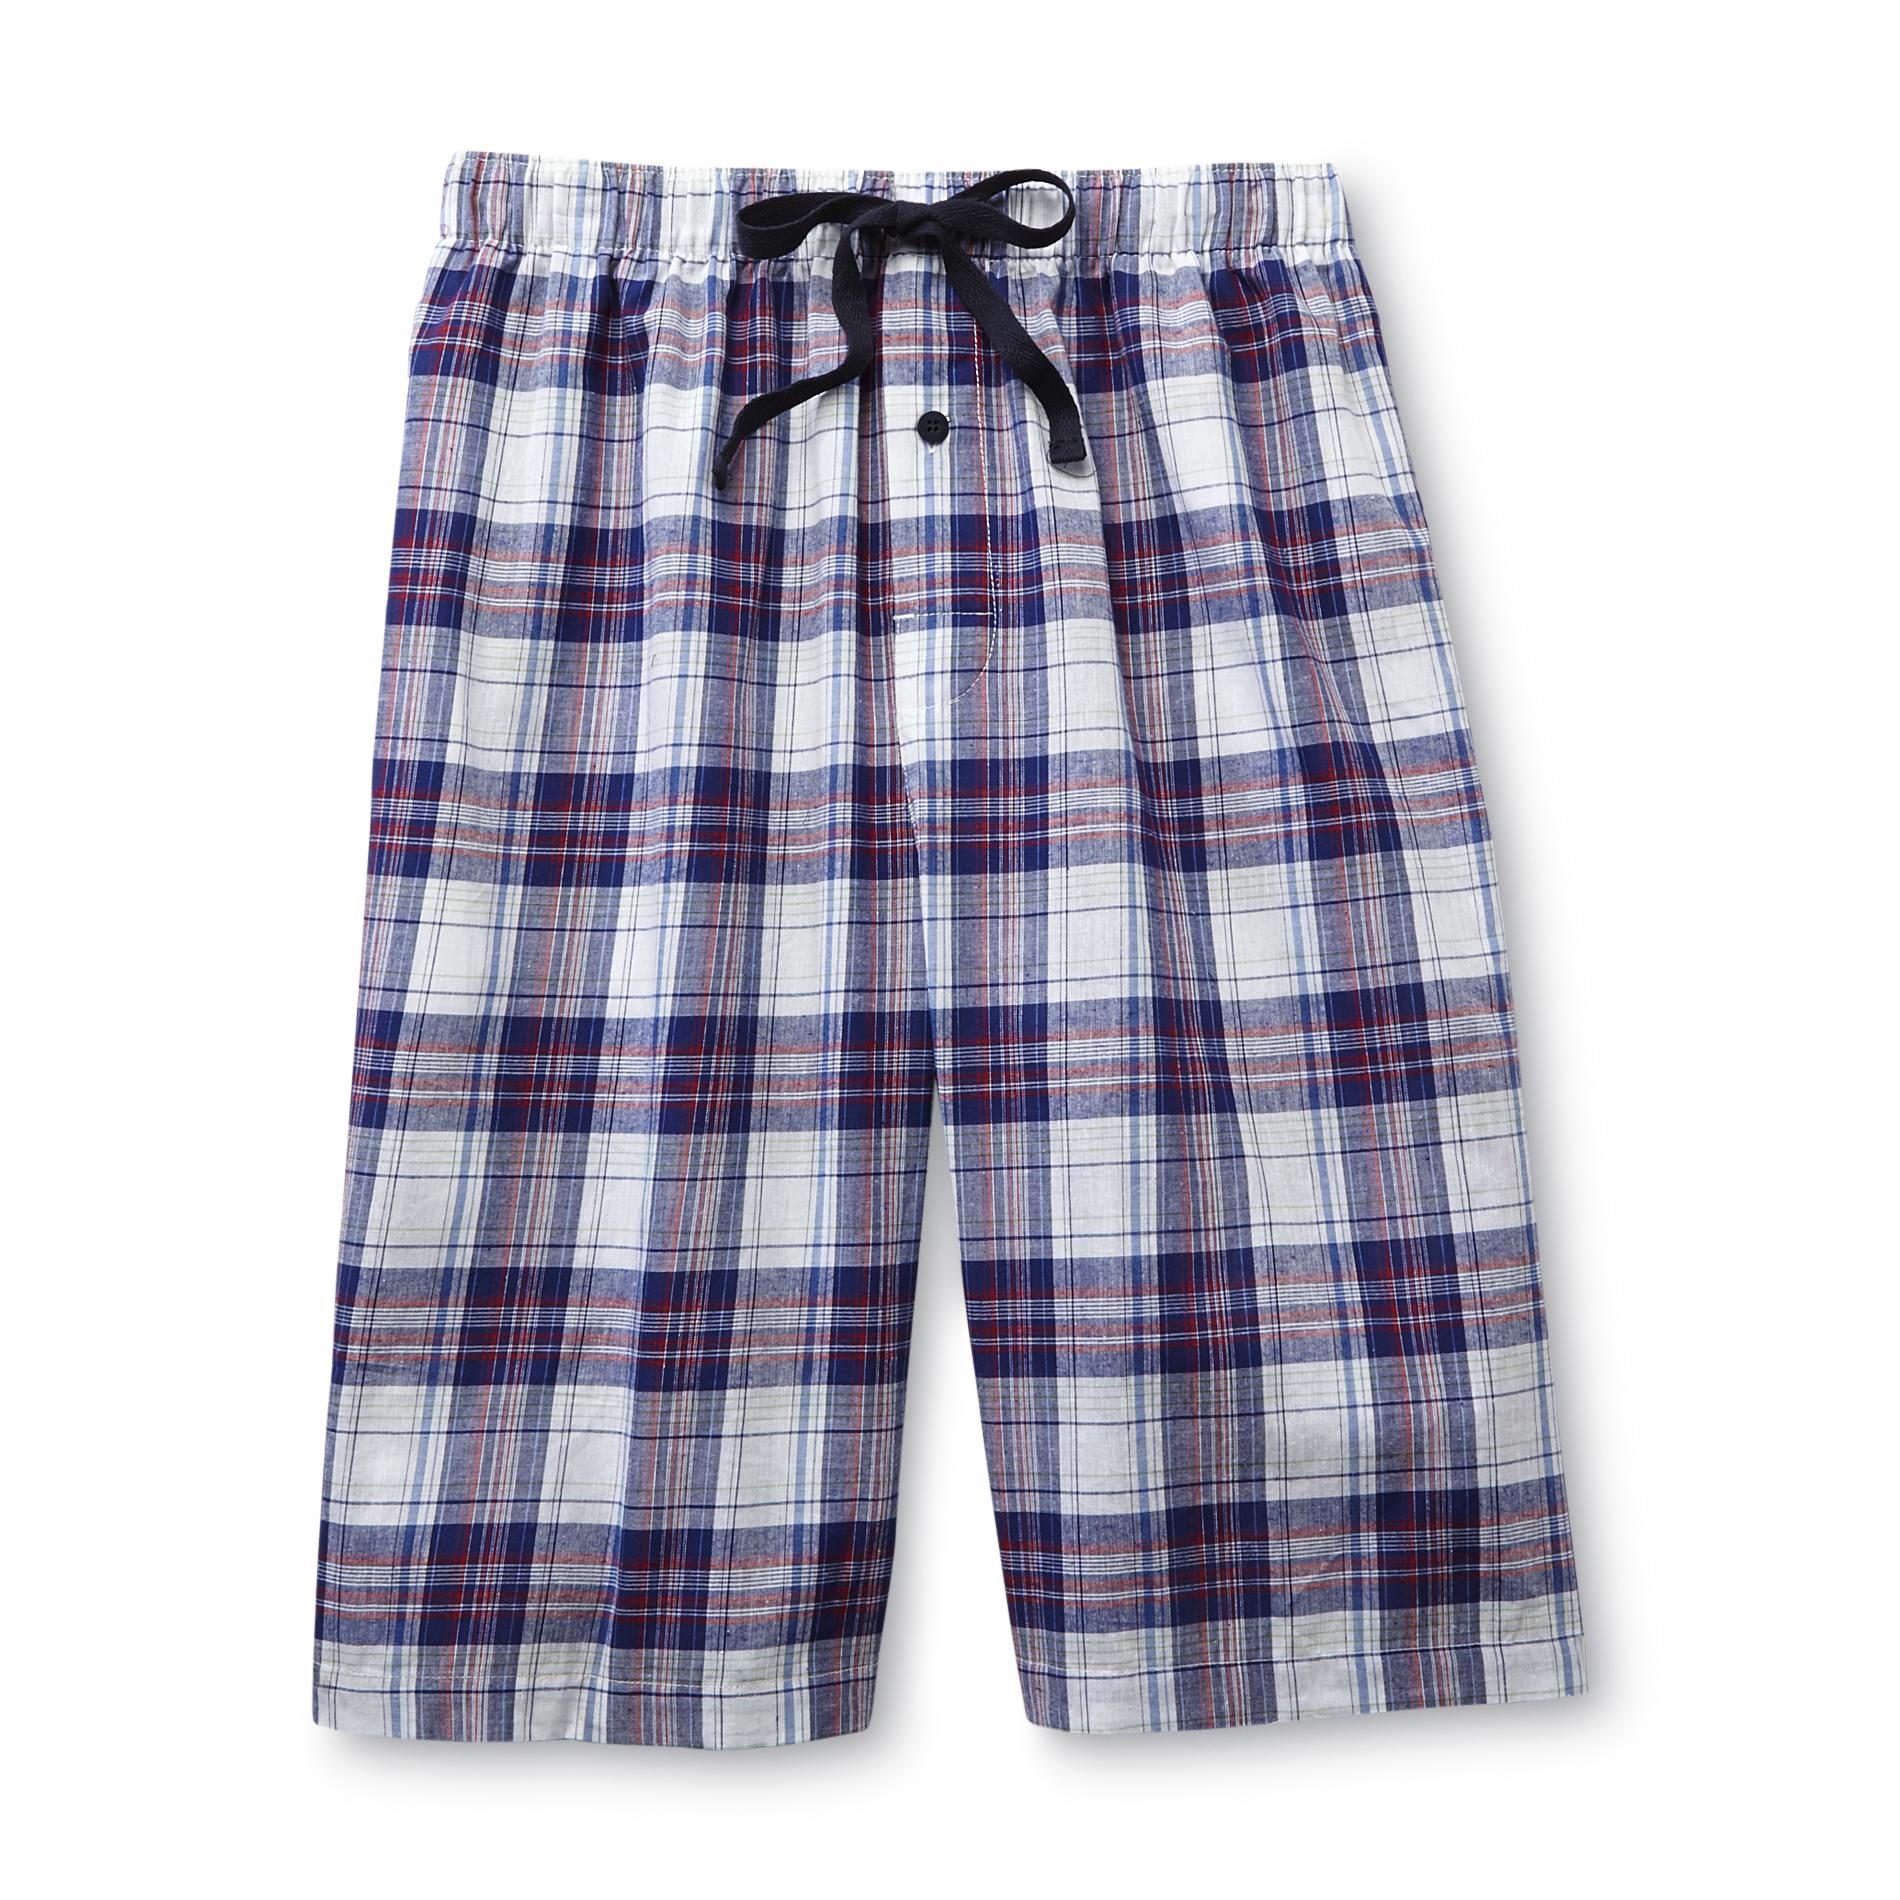 Basic Editions Men's Pajama Shorts - Plaid